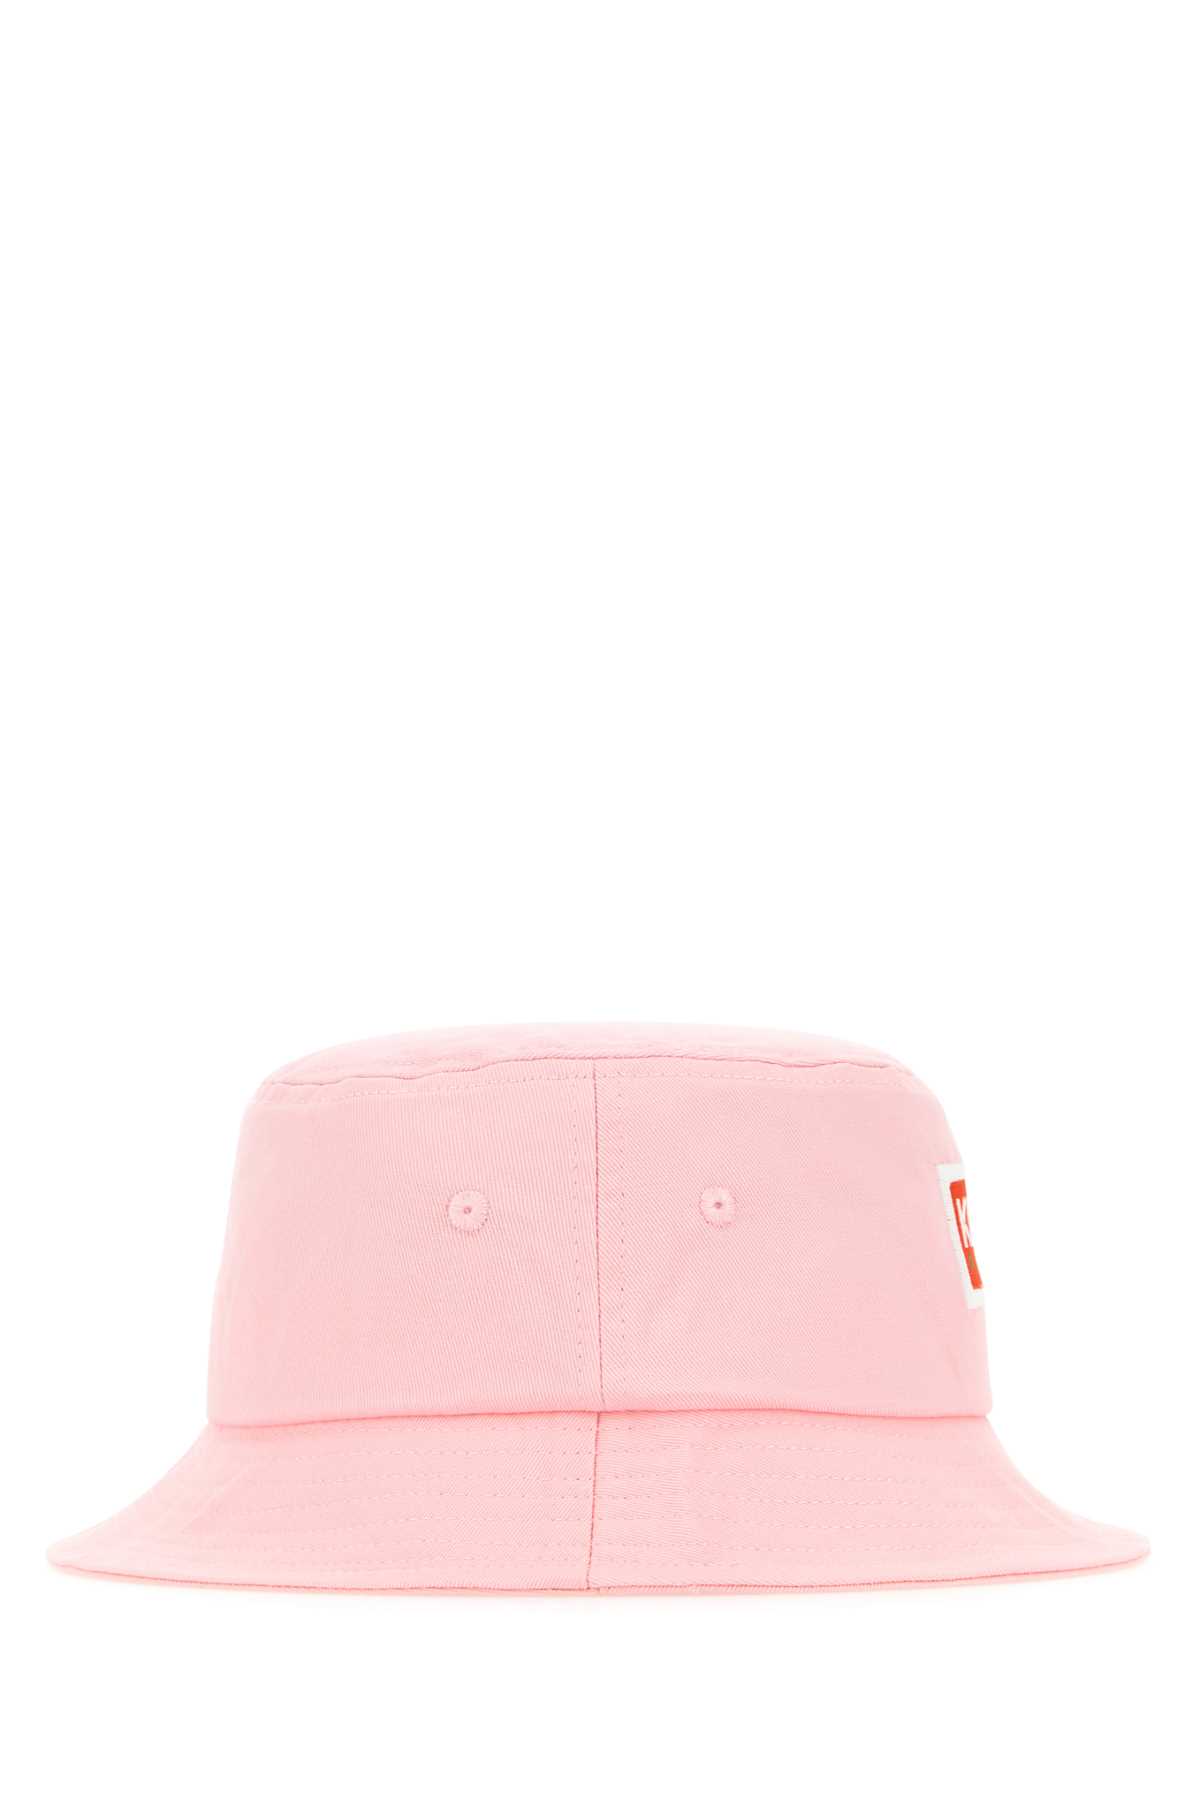 Kenzo Pink Cotton Bucket Hat In Fadedpink